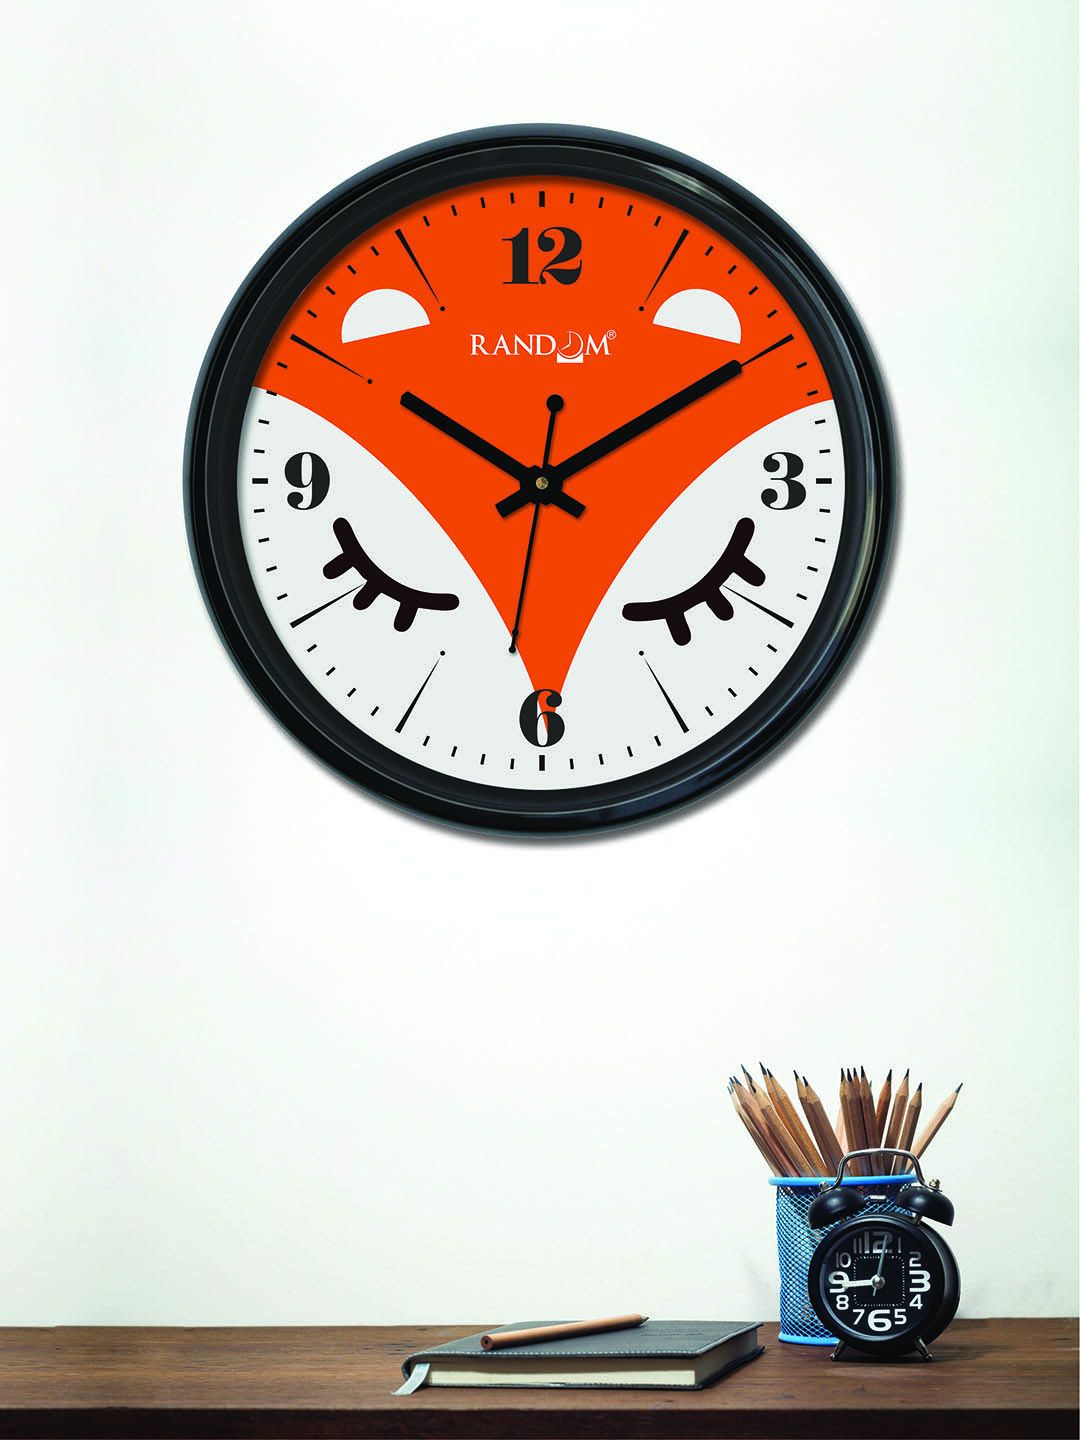 RANDOM Off-White & Orange Round Printed 30 x 30 cm Analogue Wall Clock Price in India